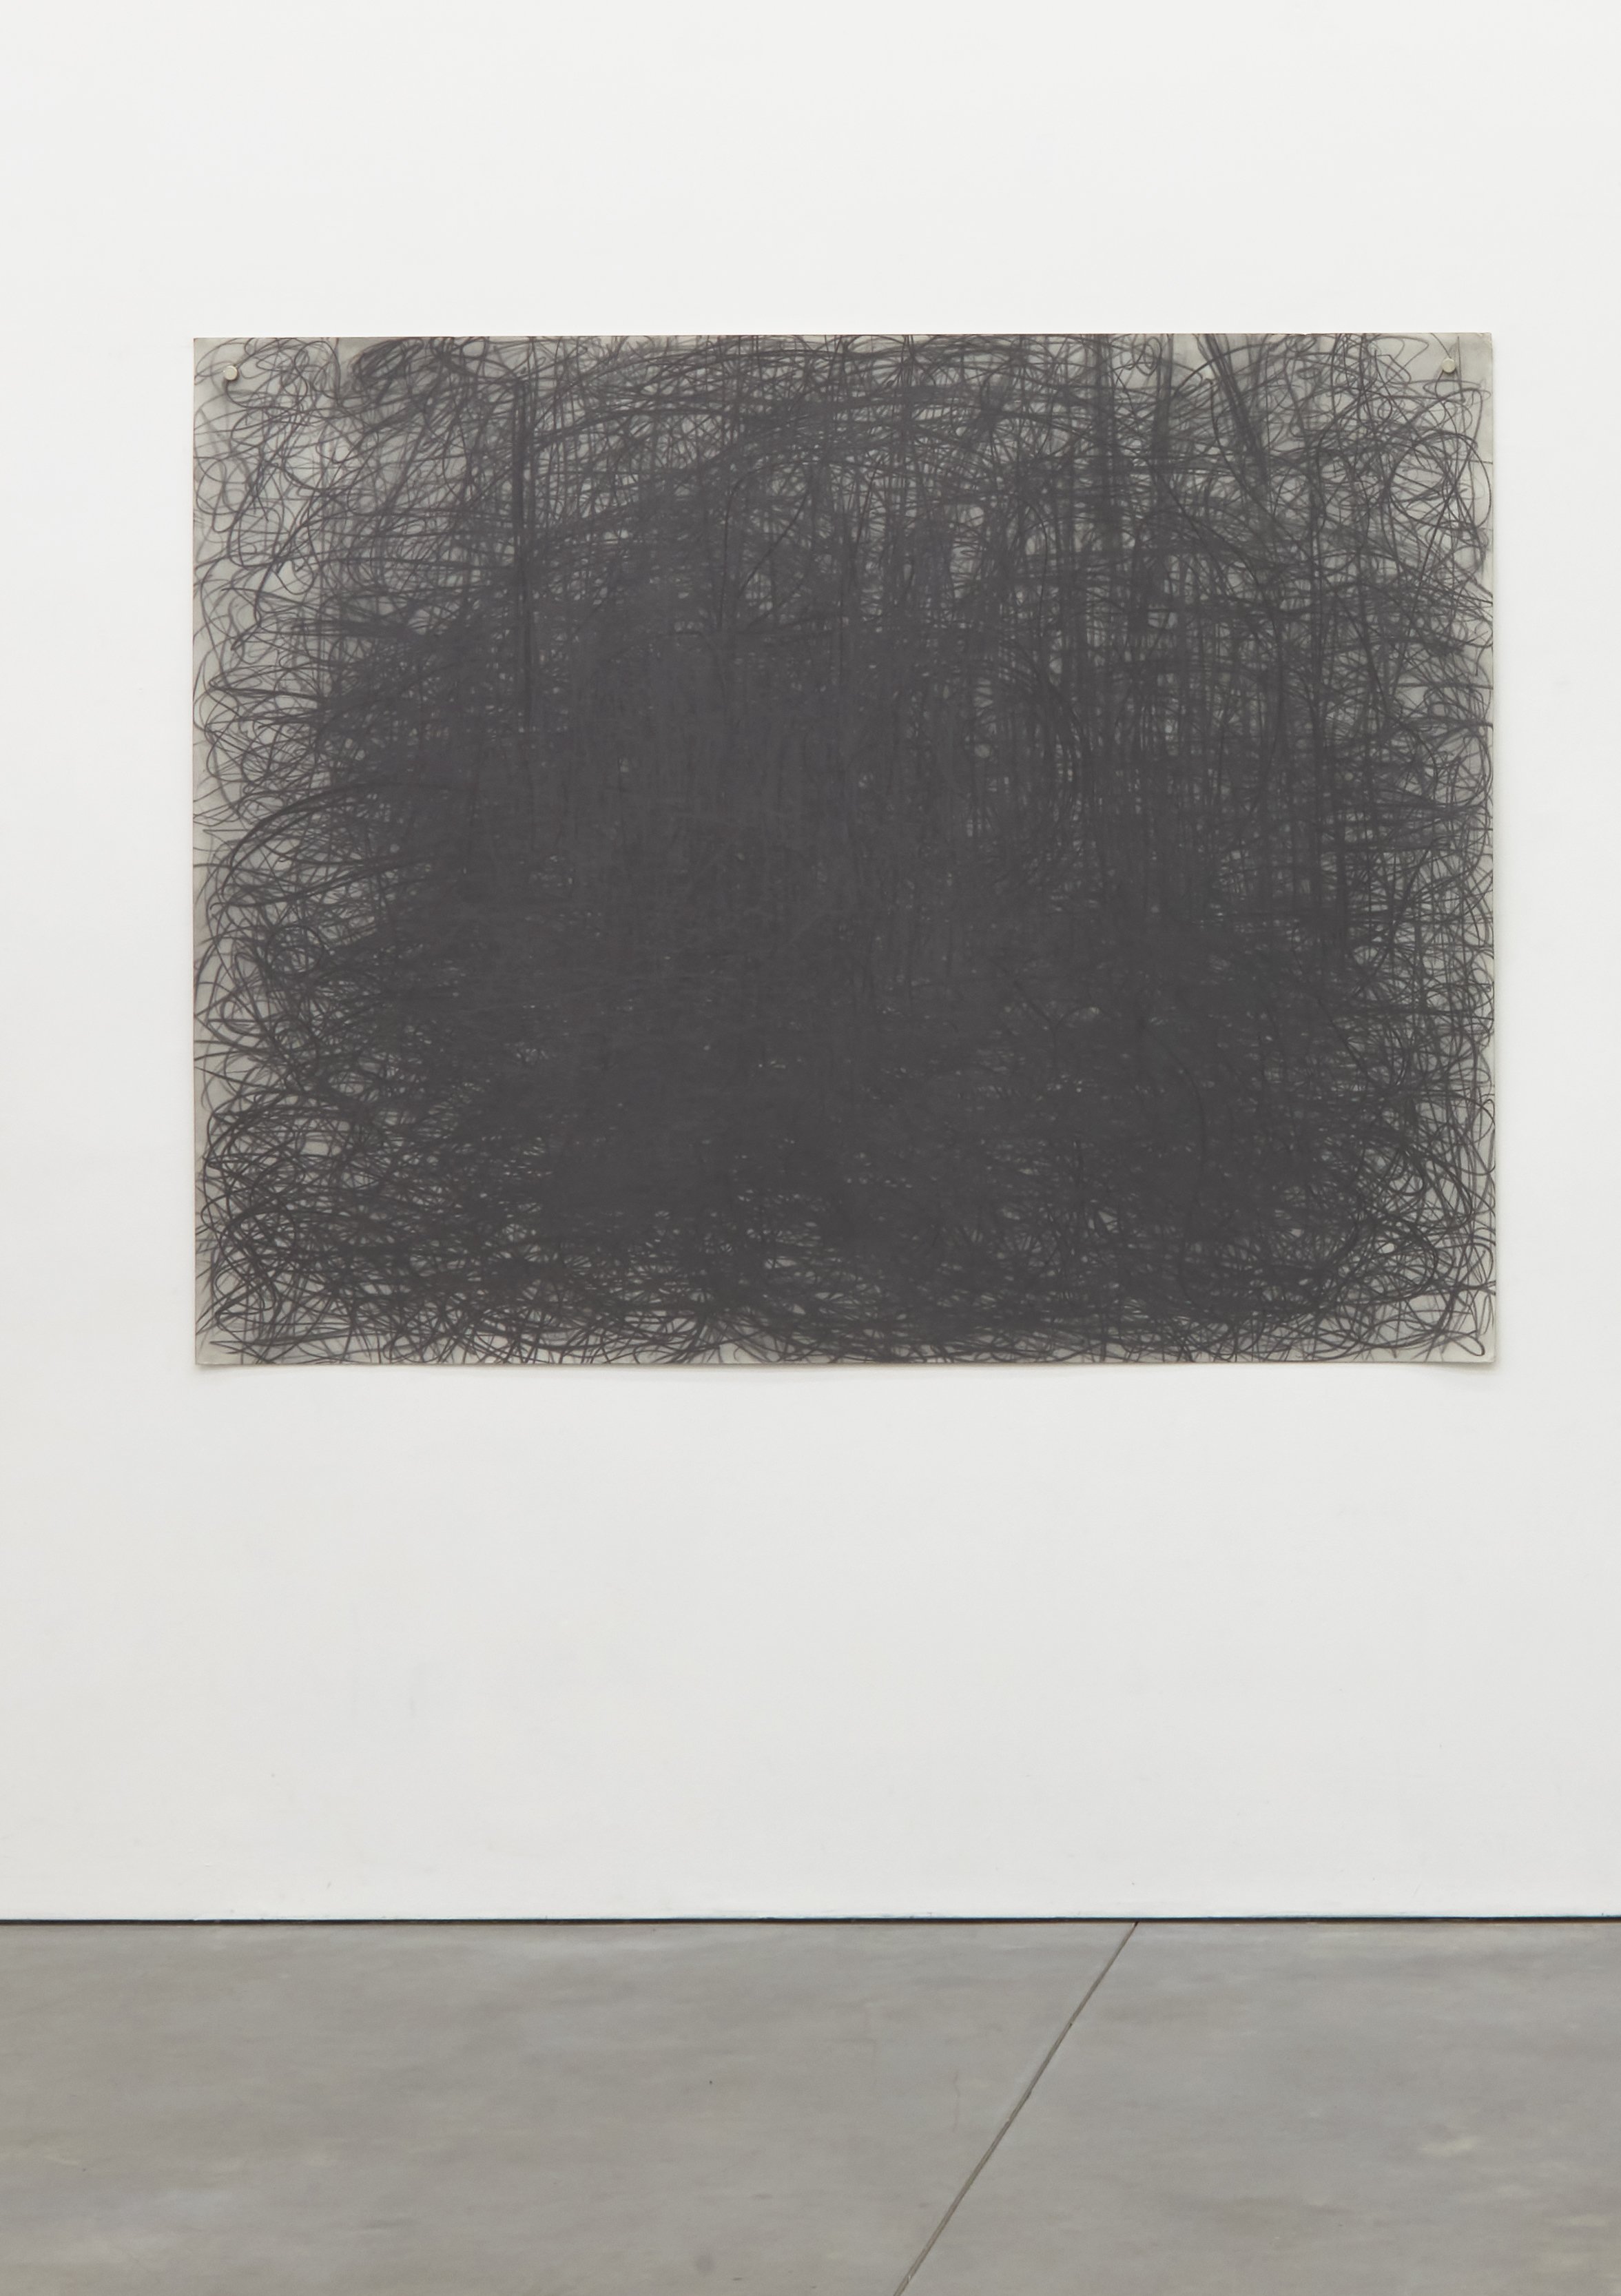  Margarita Gluzberg,  Rotational , Film Experiments (Stalker) , 2019, compressed graphite on paper, 145x185 cm 